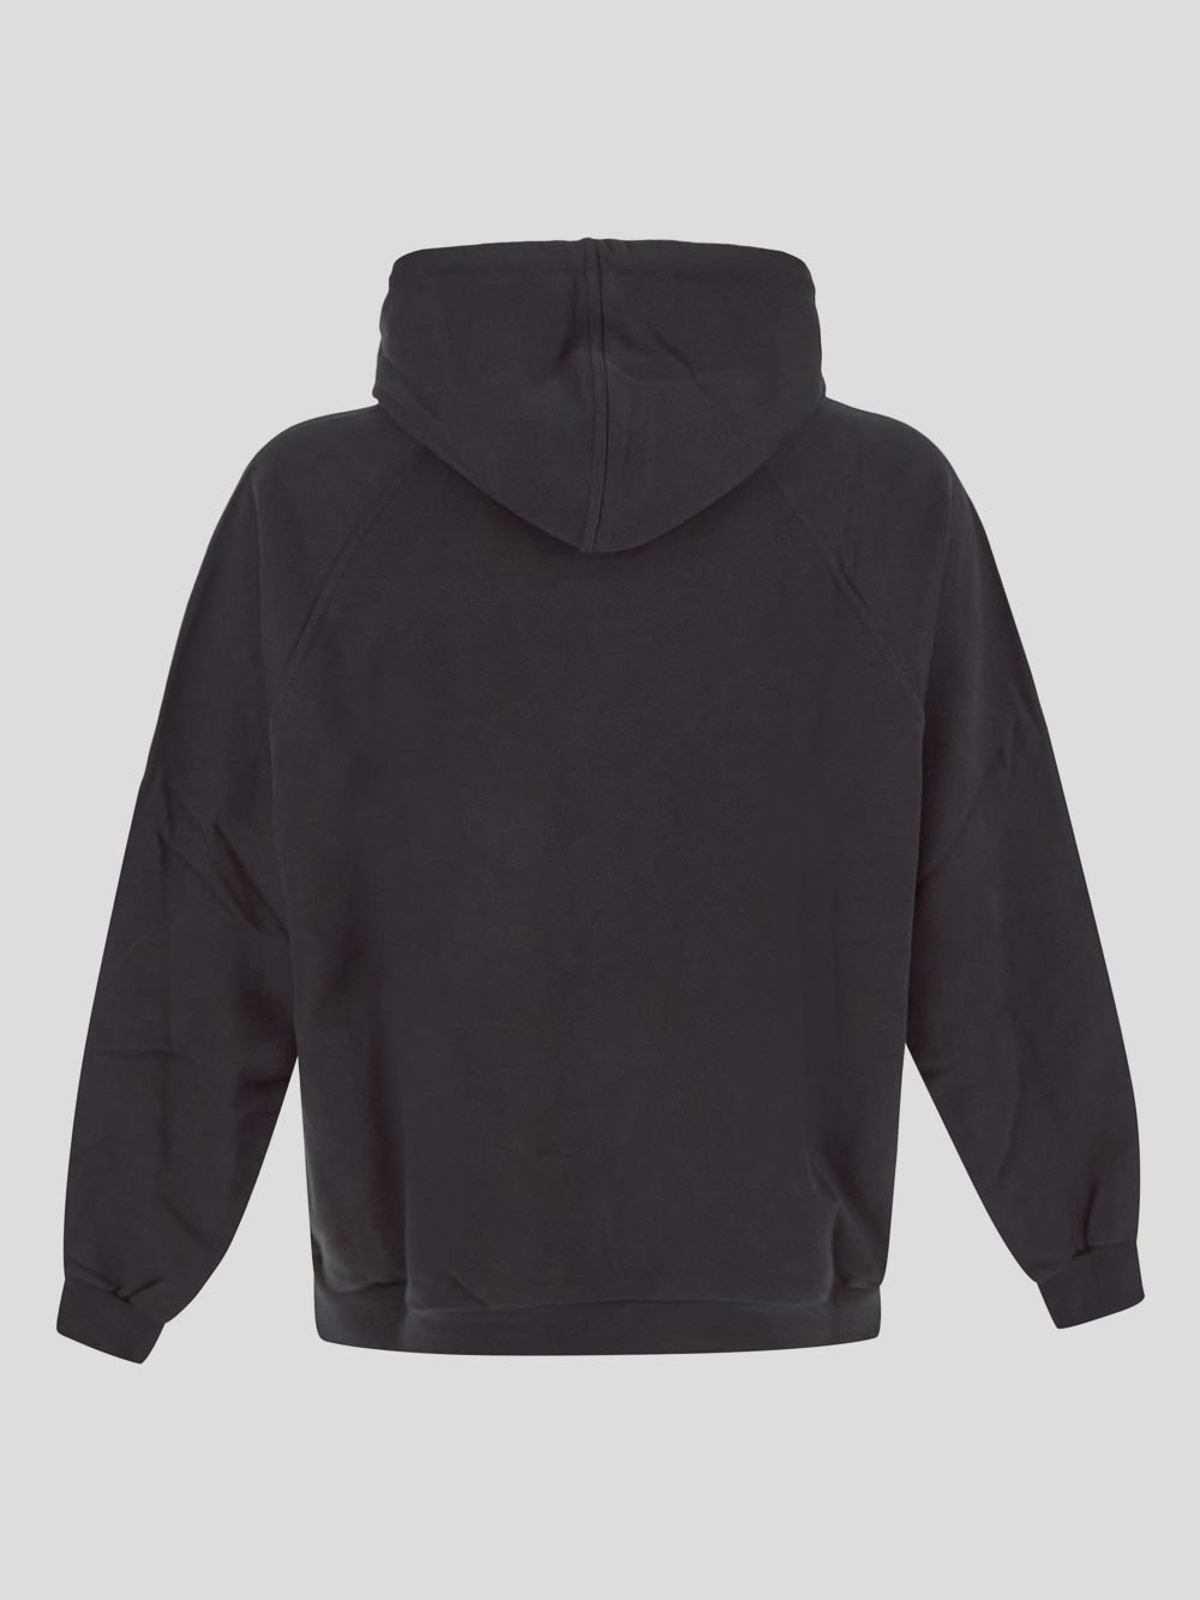 Shop Sunnei Sweatshirt With Long Sleeves In Black